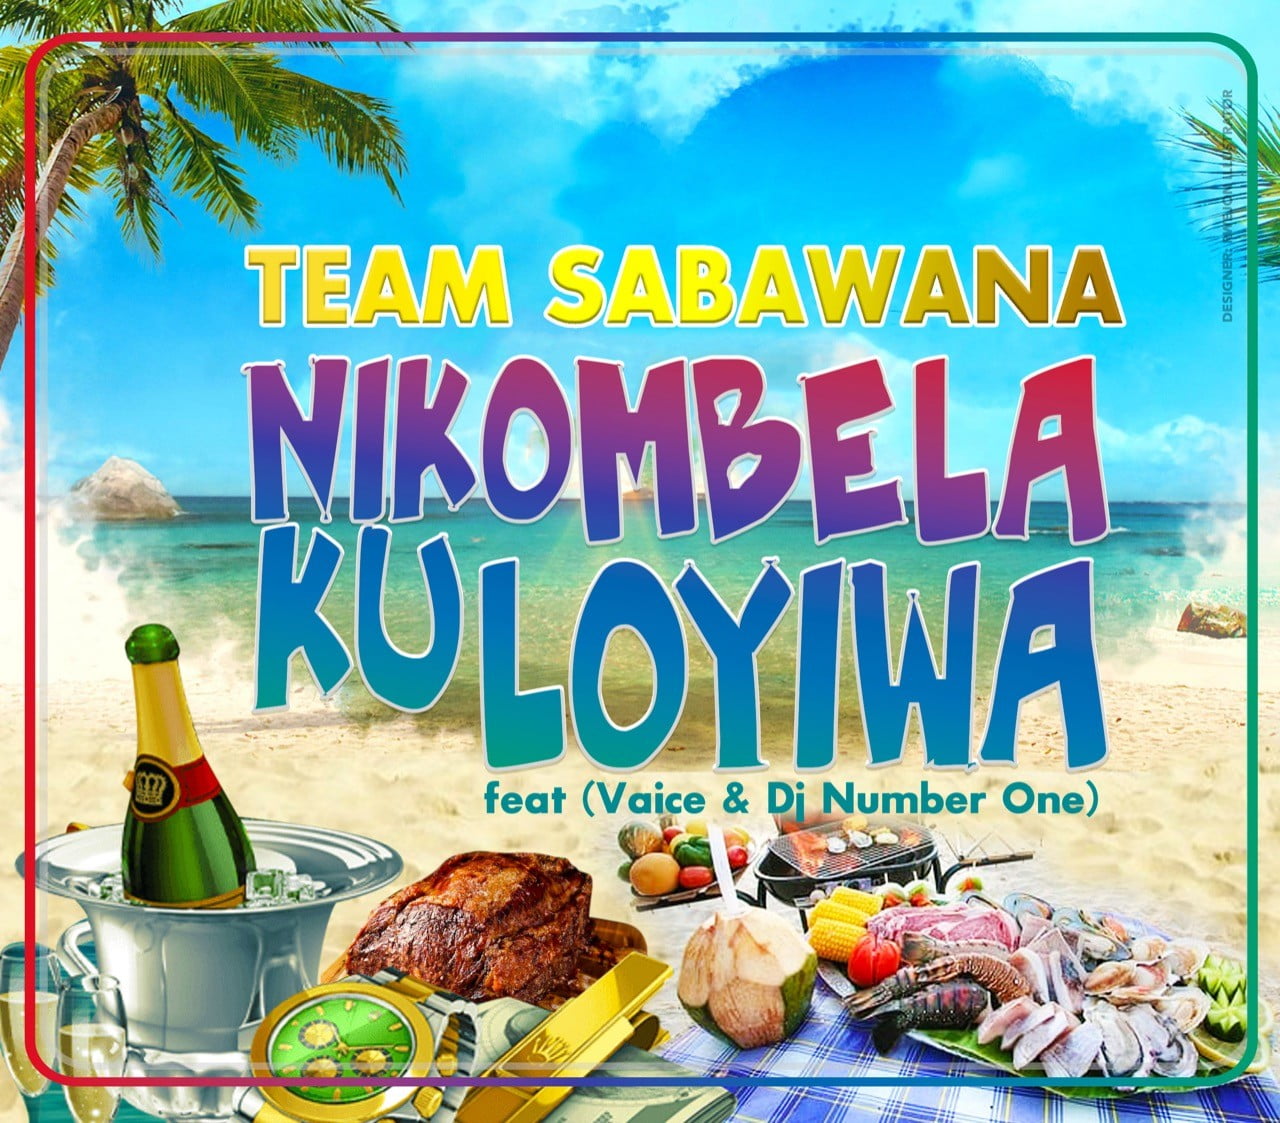 Team Sabawana - Nikombela Ku Loyiwa (feat. Vaice & DJ Number One)